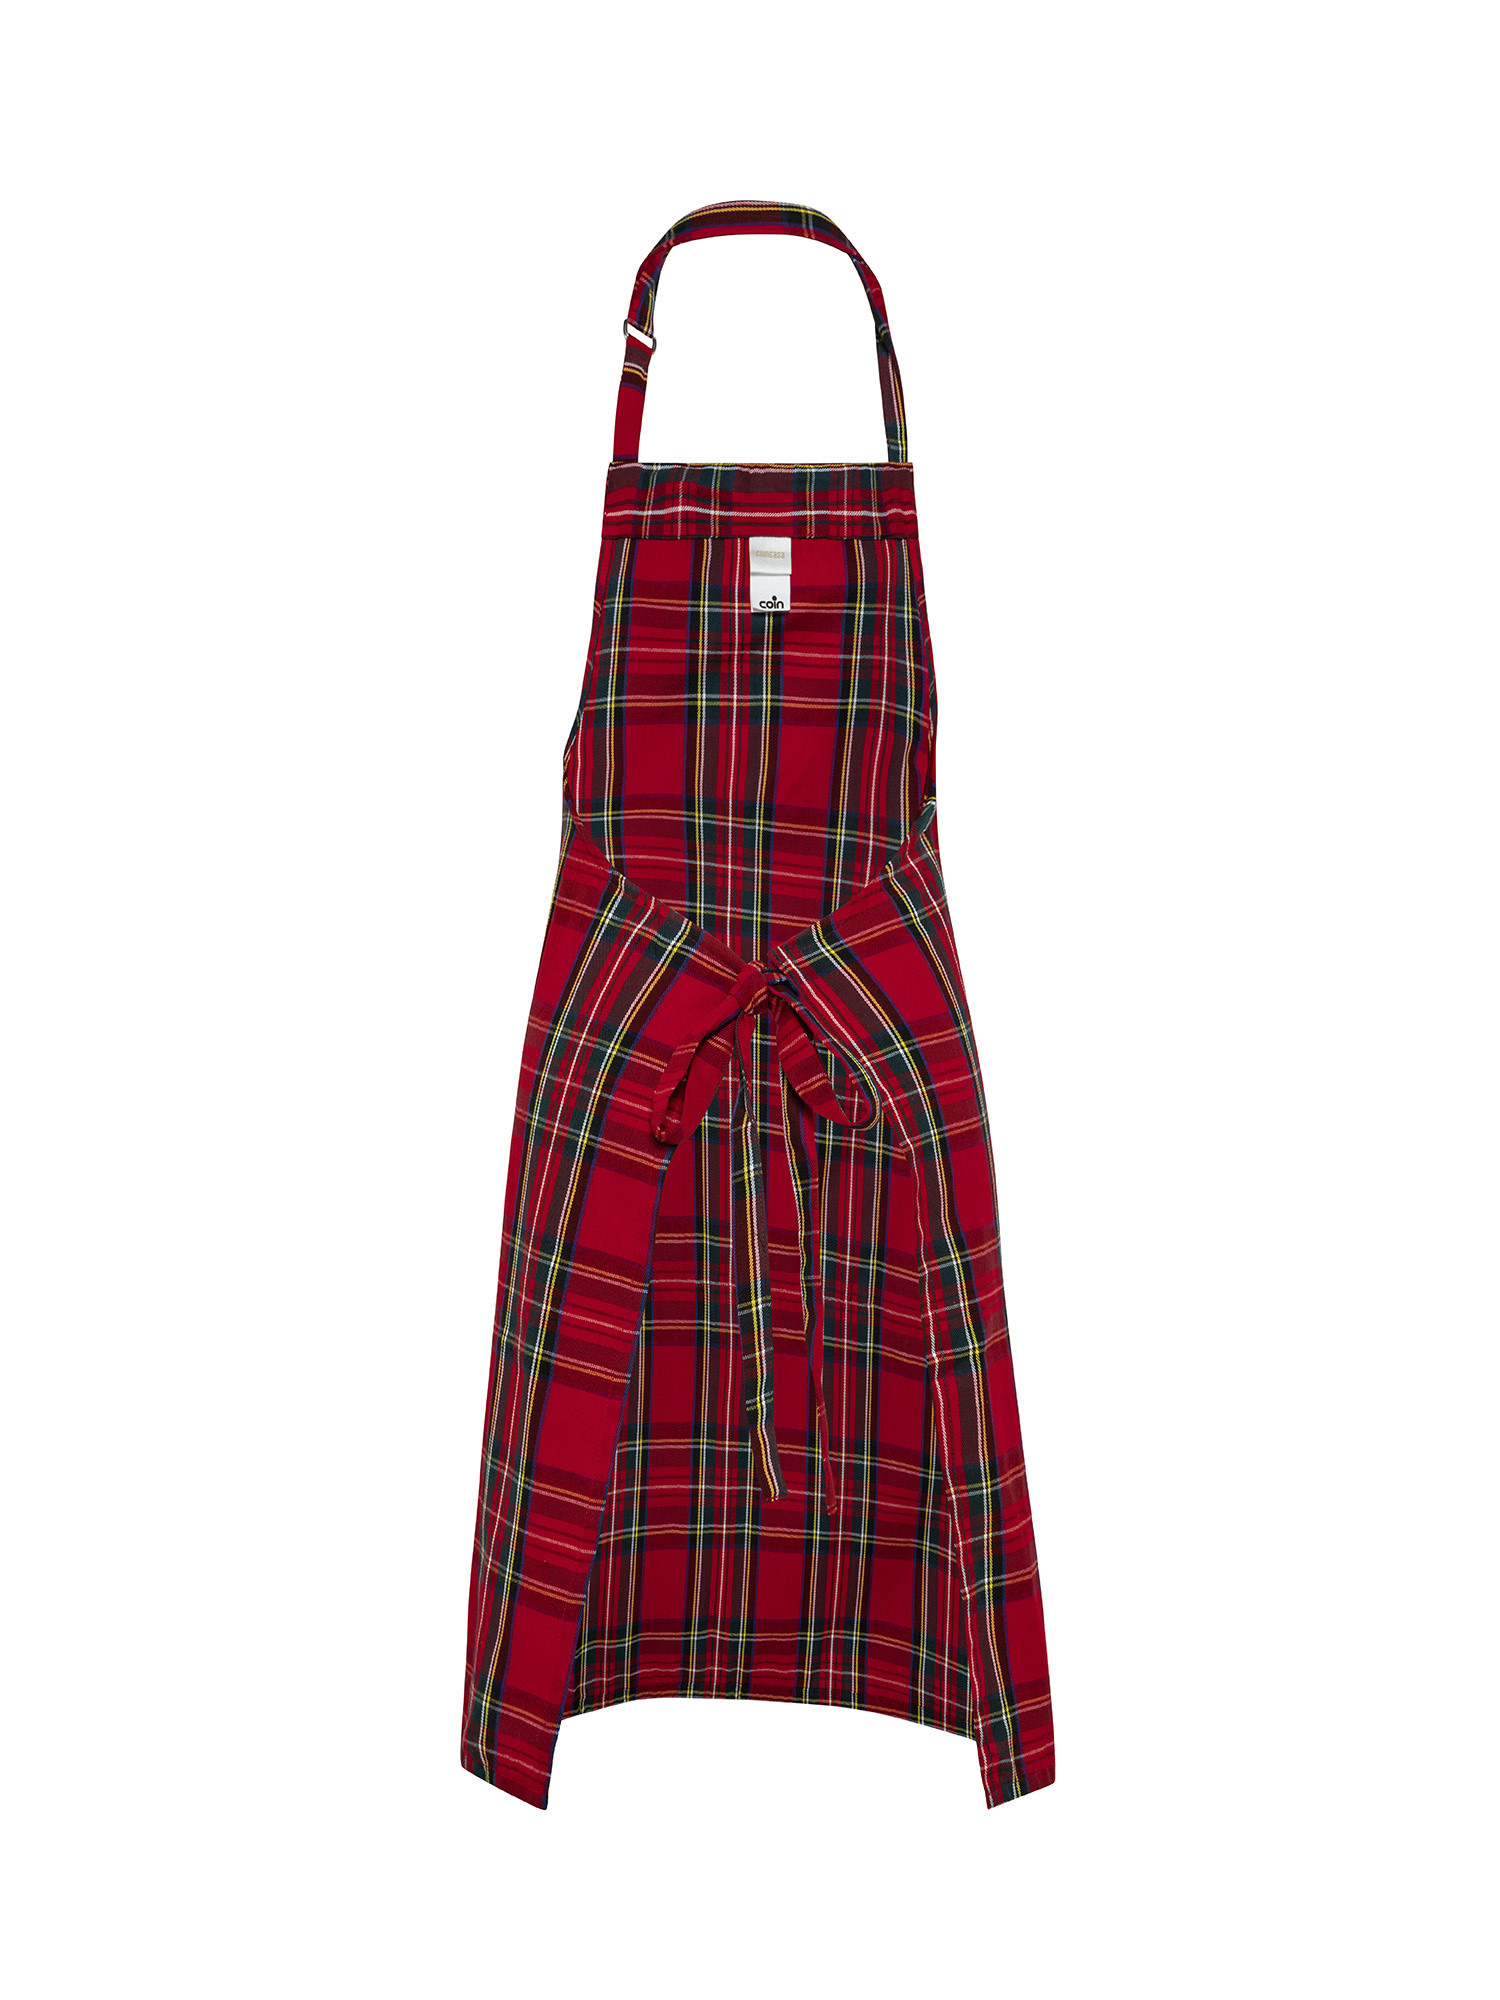 Tartan cotton twill kitchen apron, Red, large image number 1